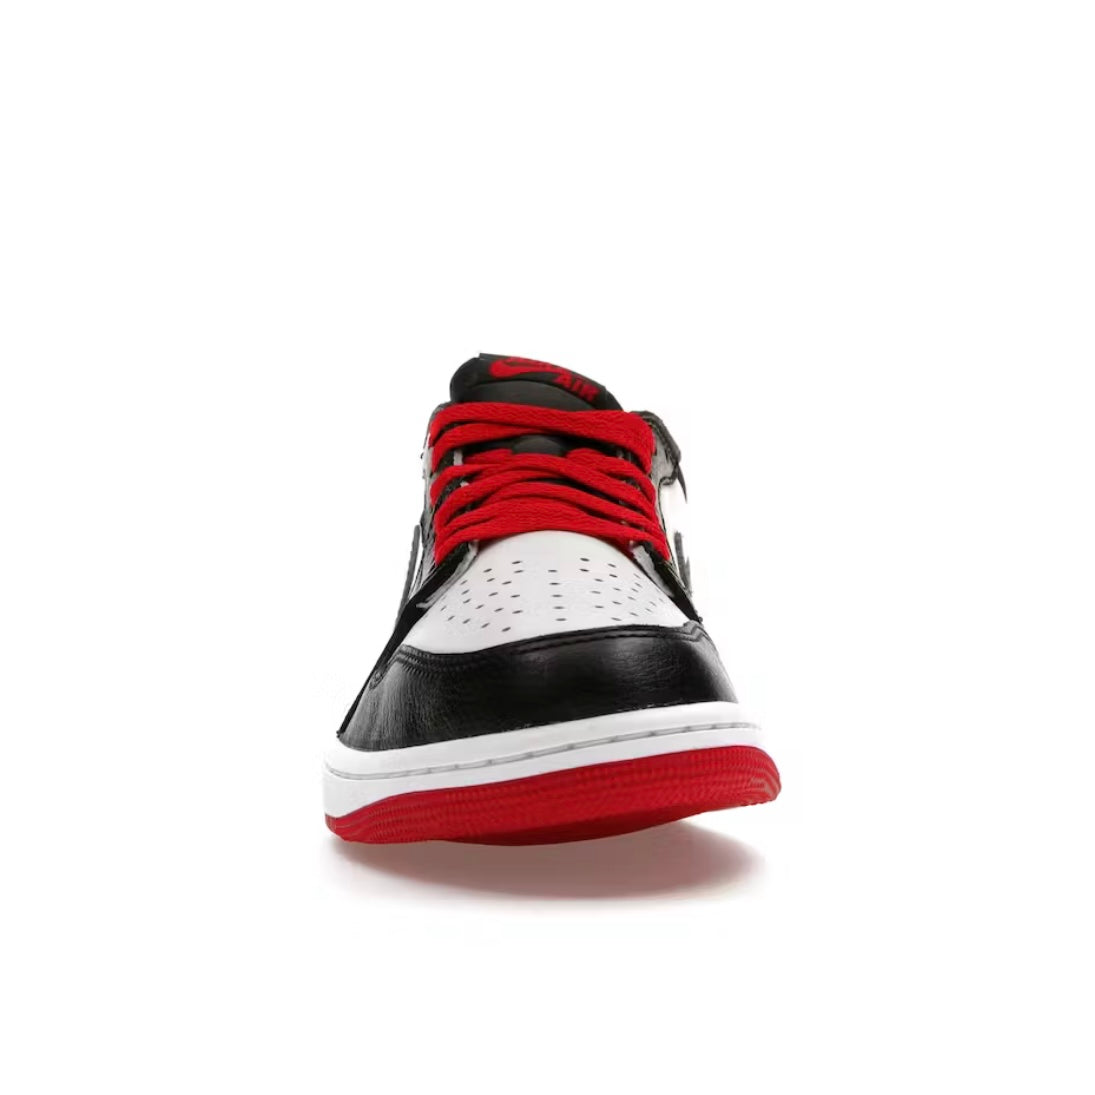 Jordan 1 Low “OG Black Toe”